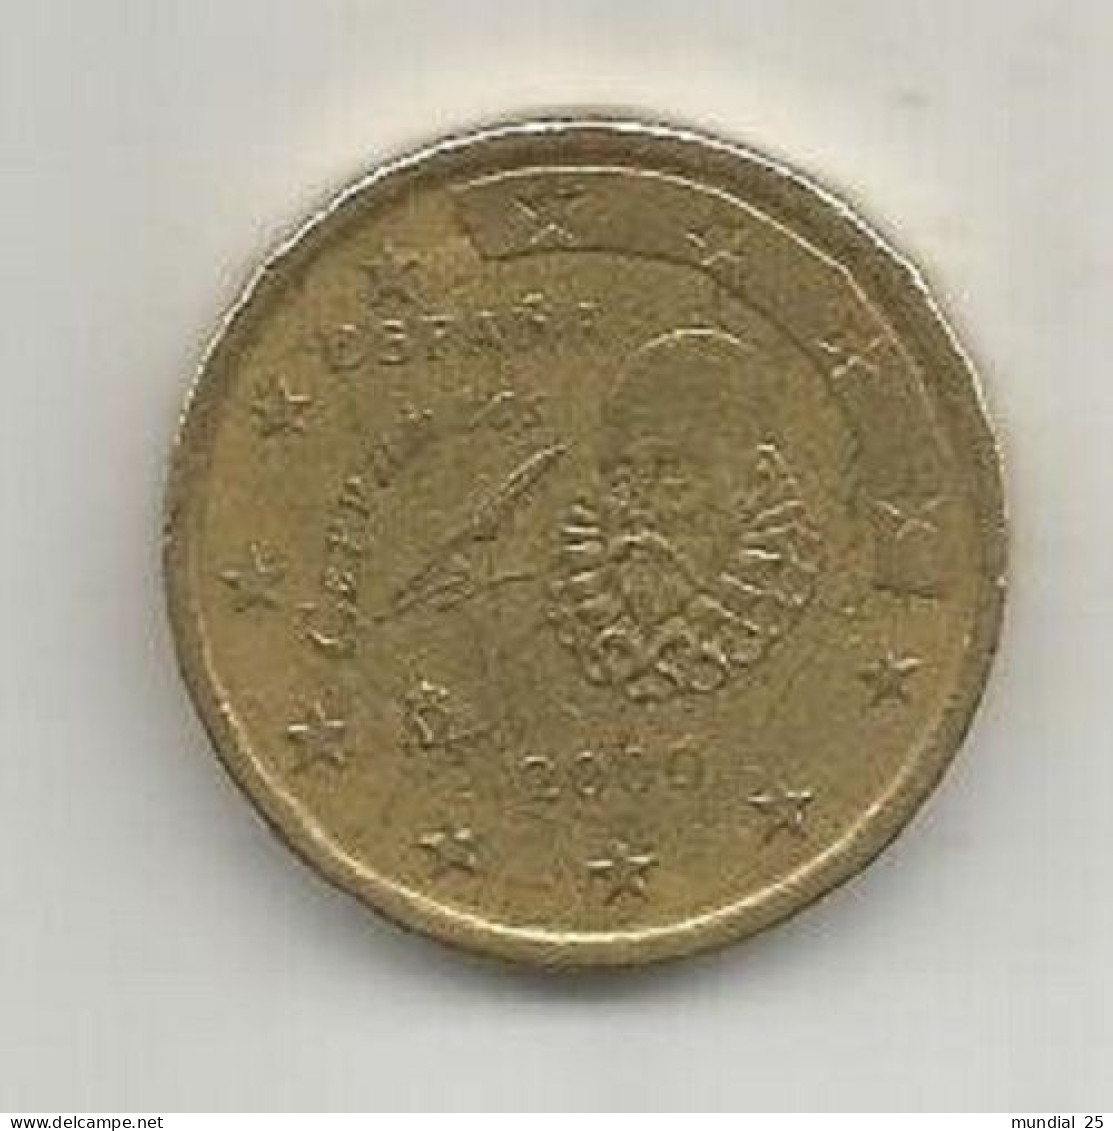 SPAIN 50 EURO CENT 2000 M - Spain